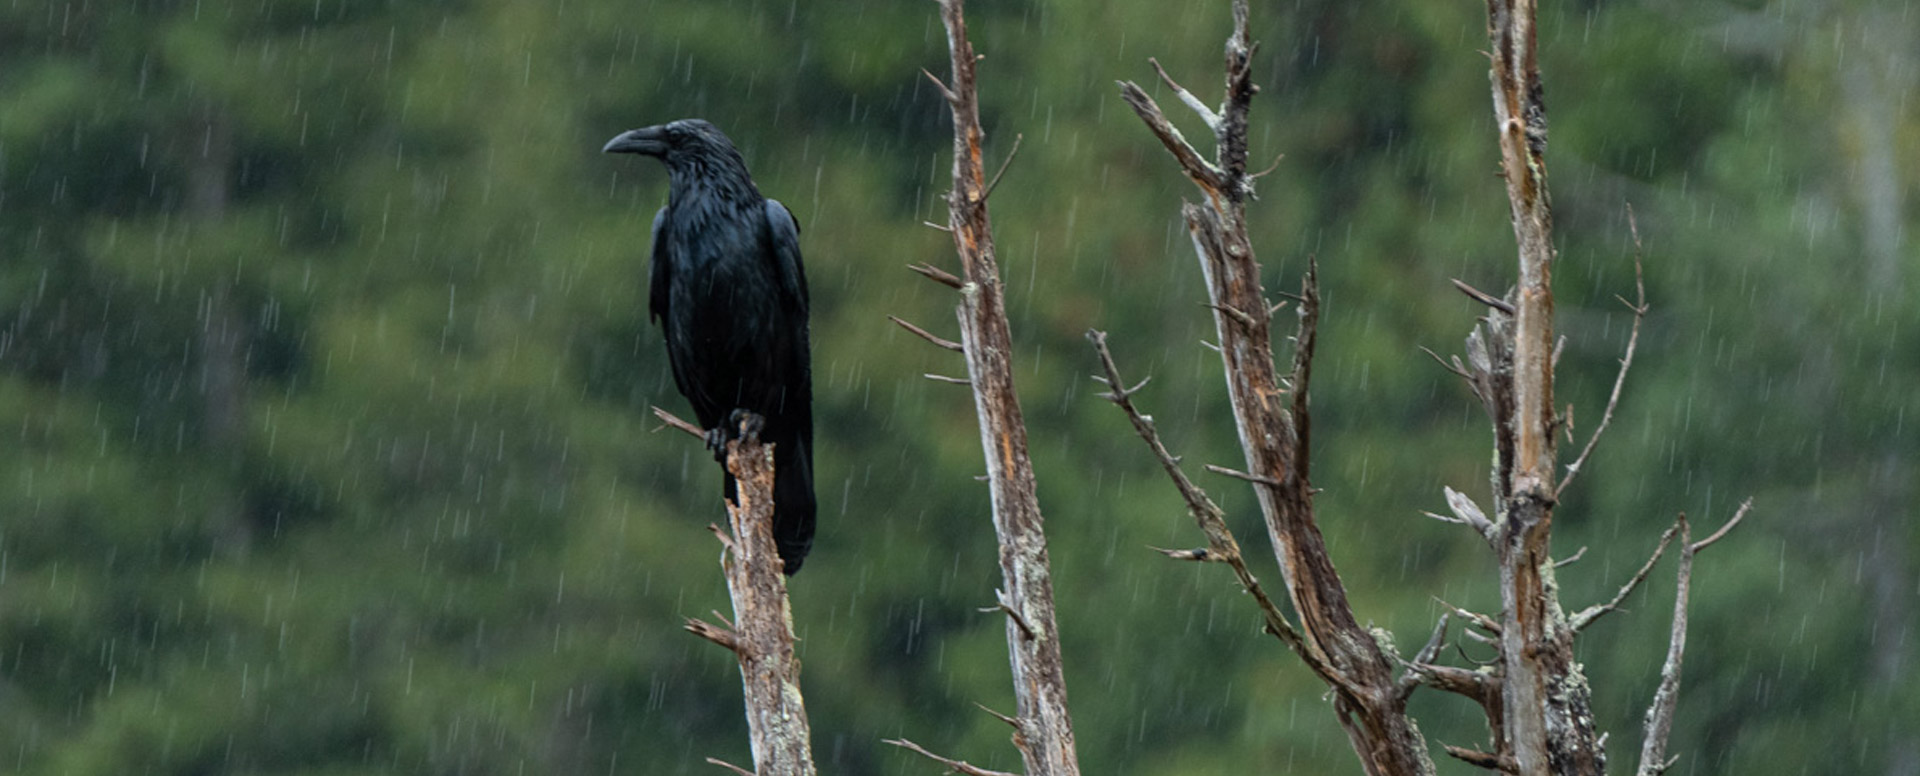 Raven in the rain Johnstone Strait